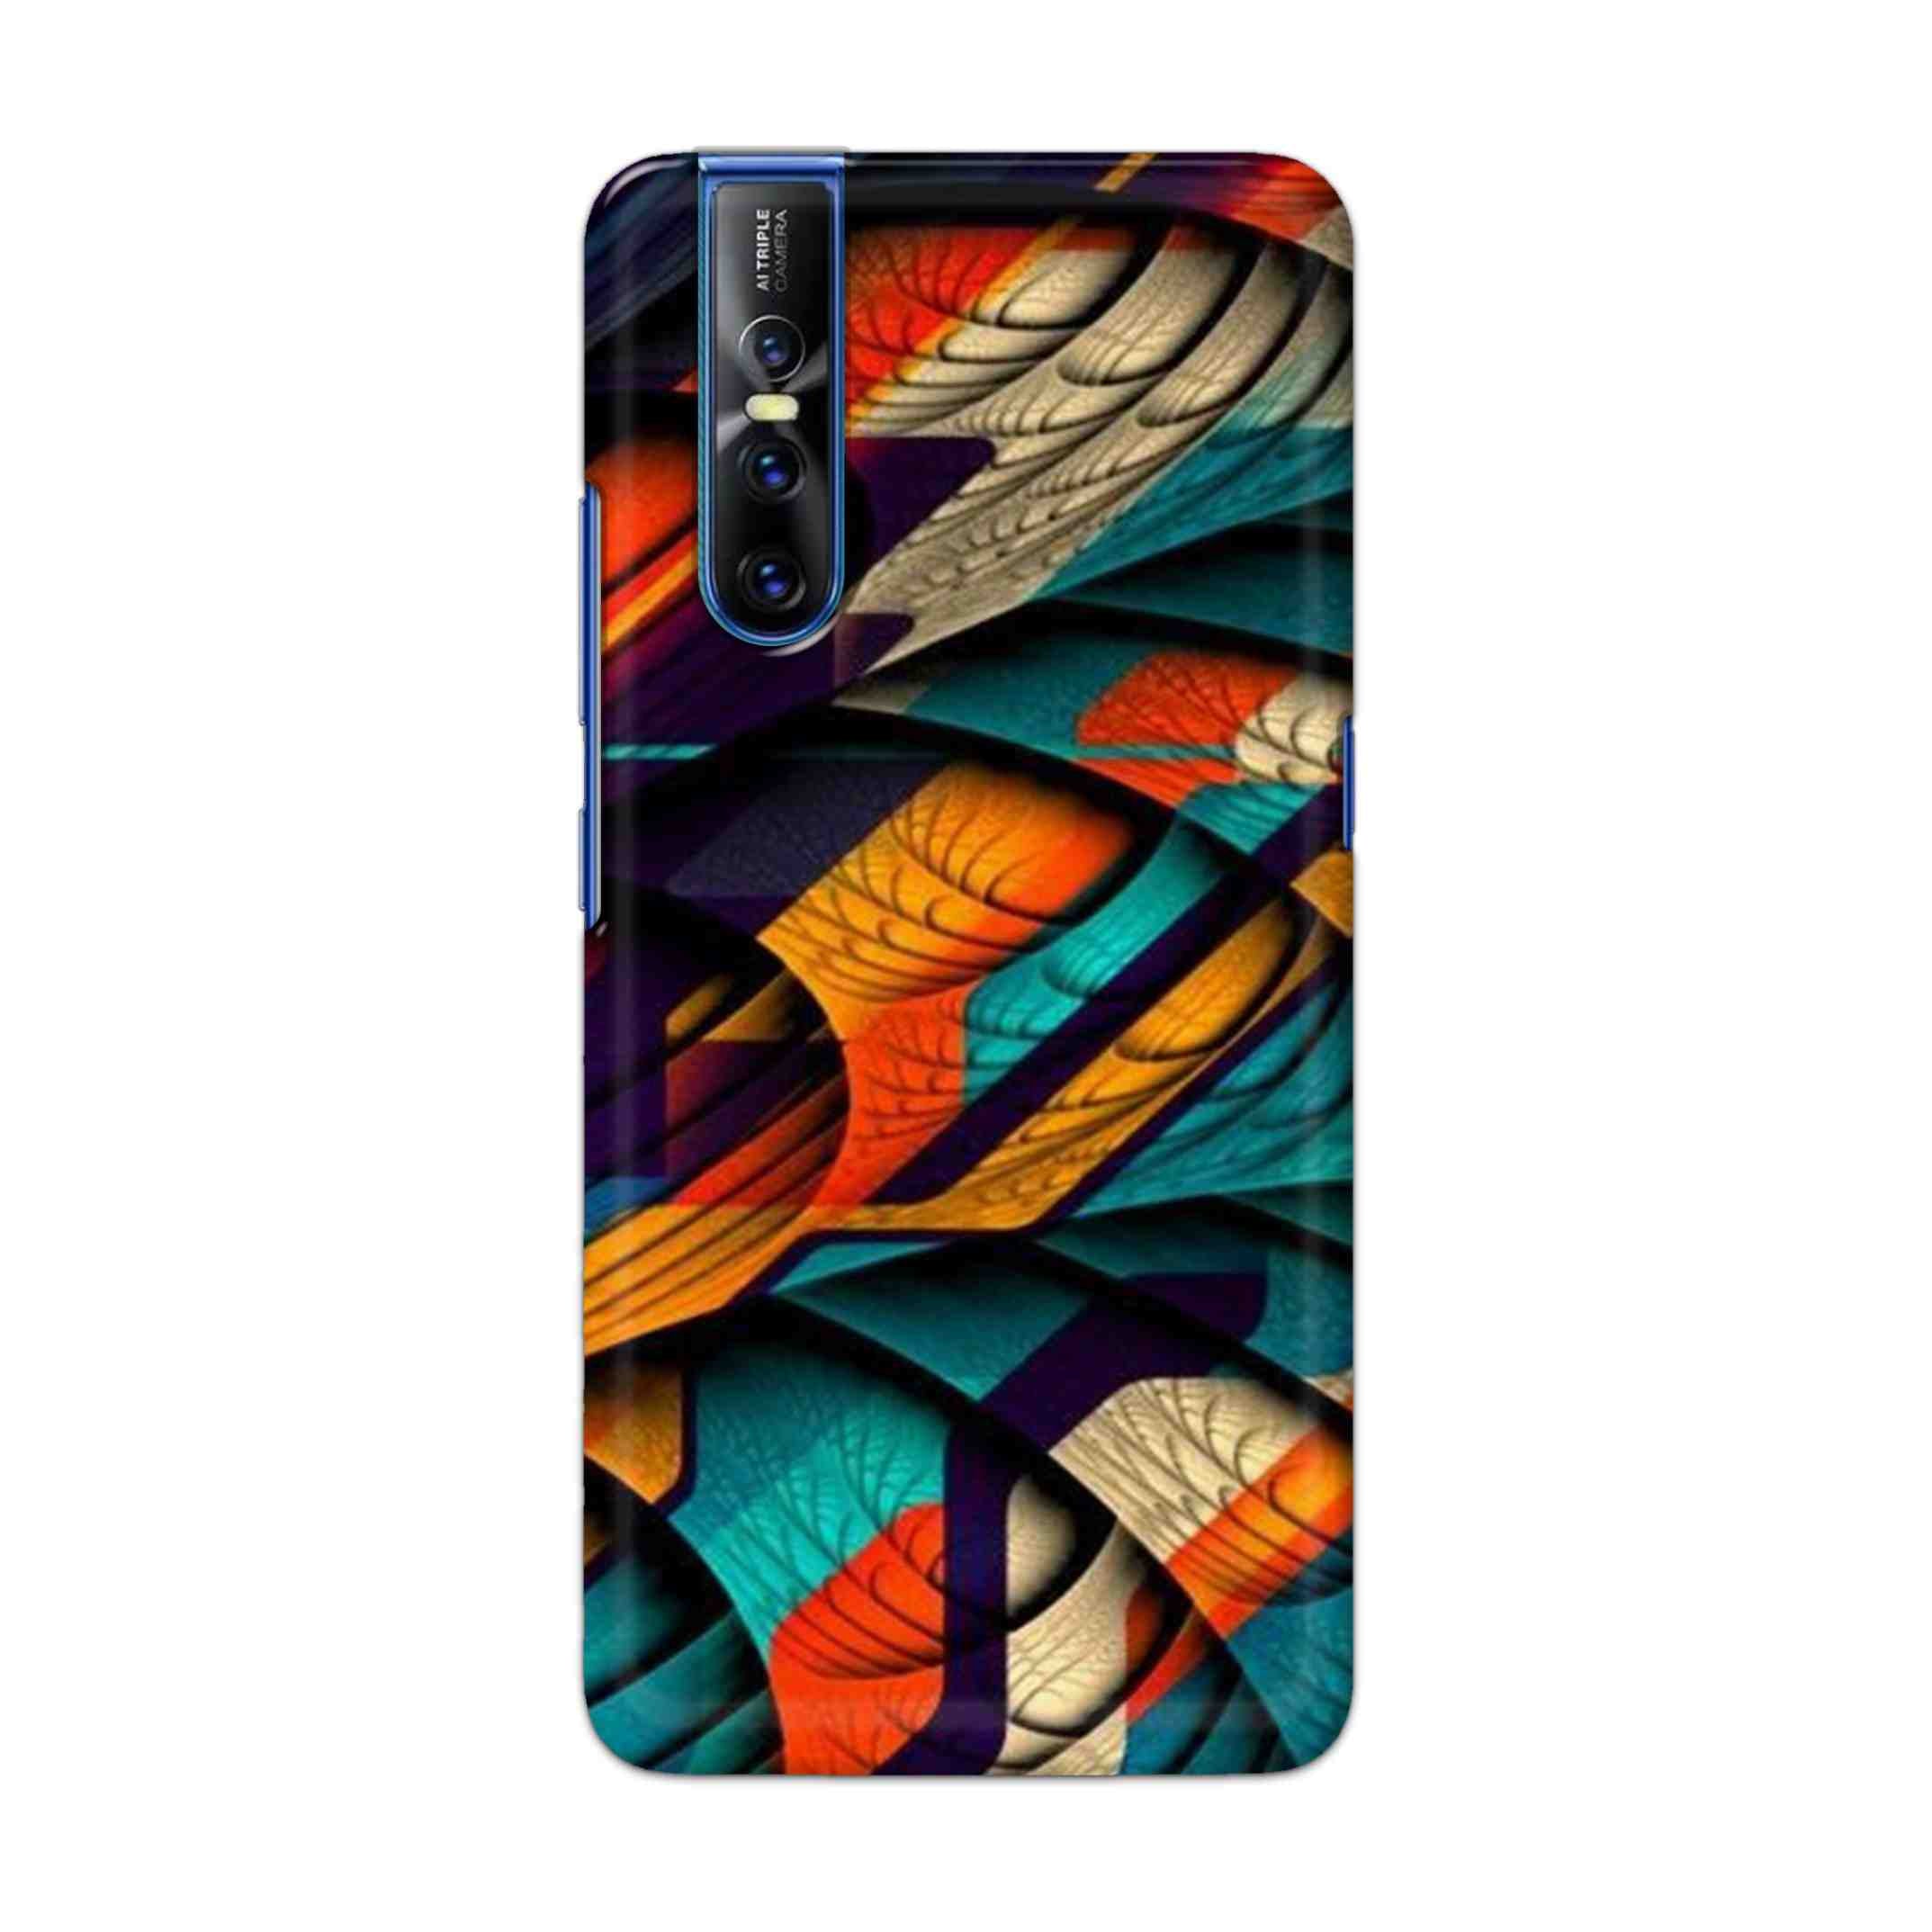 Buy Colour Abstract Hard Back Mobile Phone Case Cover For Vivo V15 Pro Online